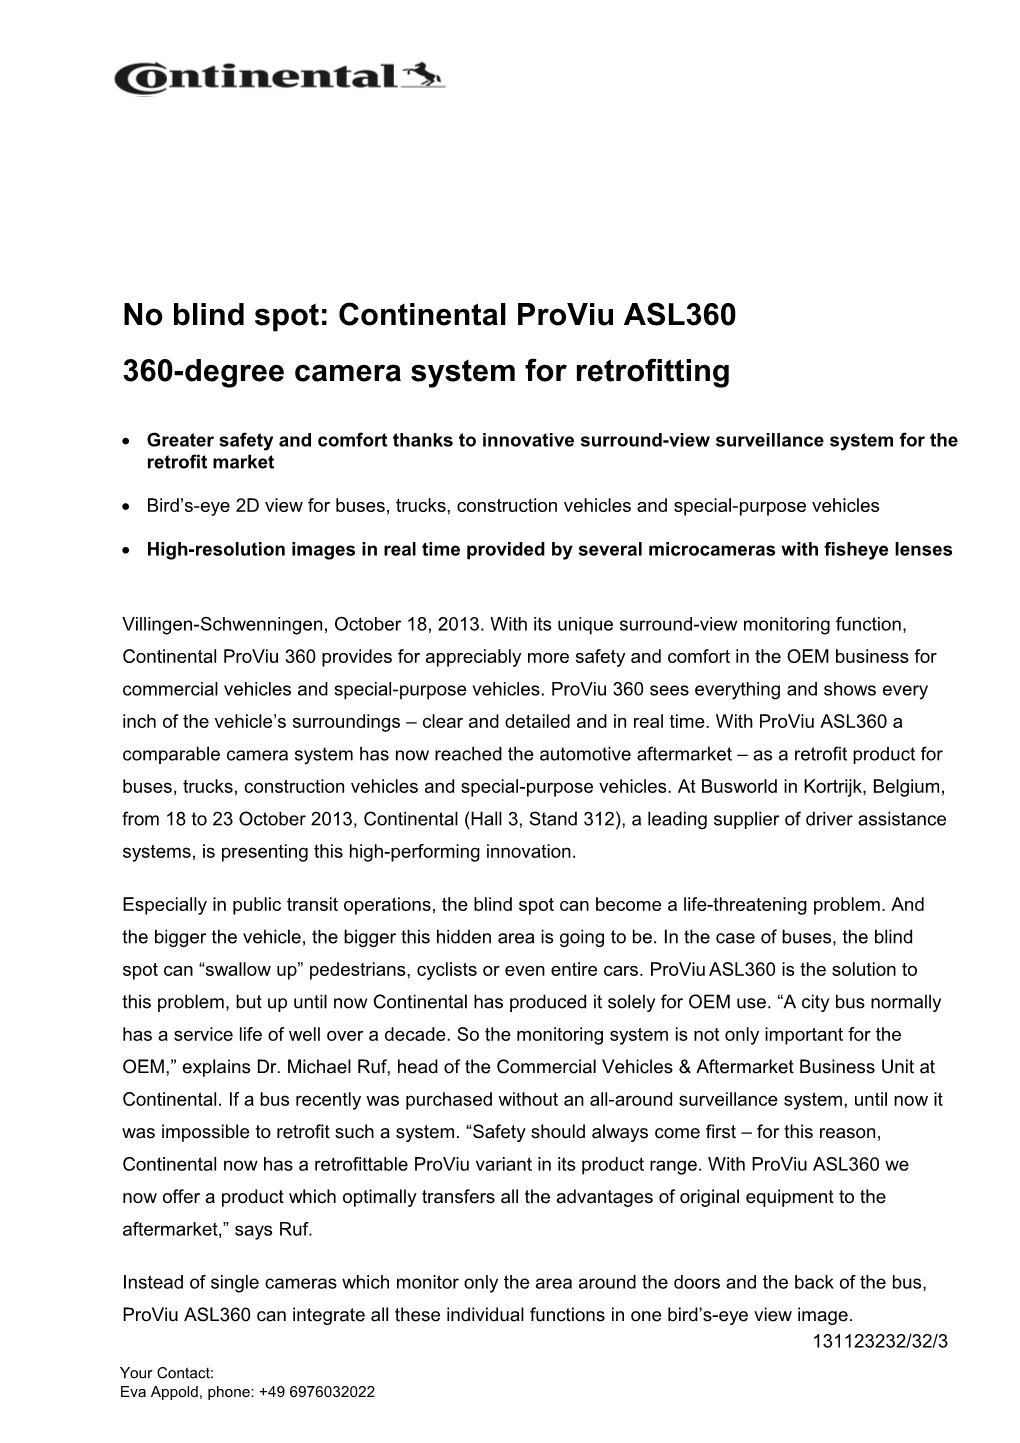 No Blind Spot: Continental Proviu ASL360 360-Degree Camera System for Retrofitting